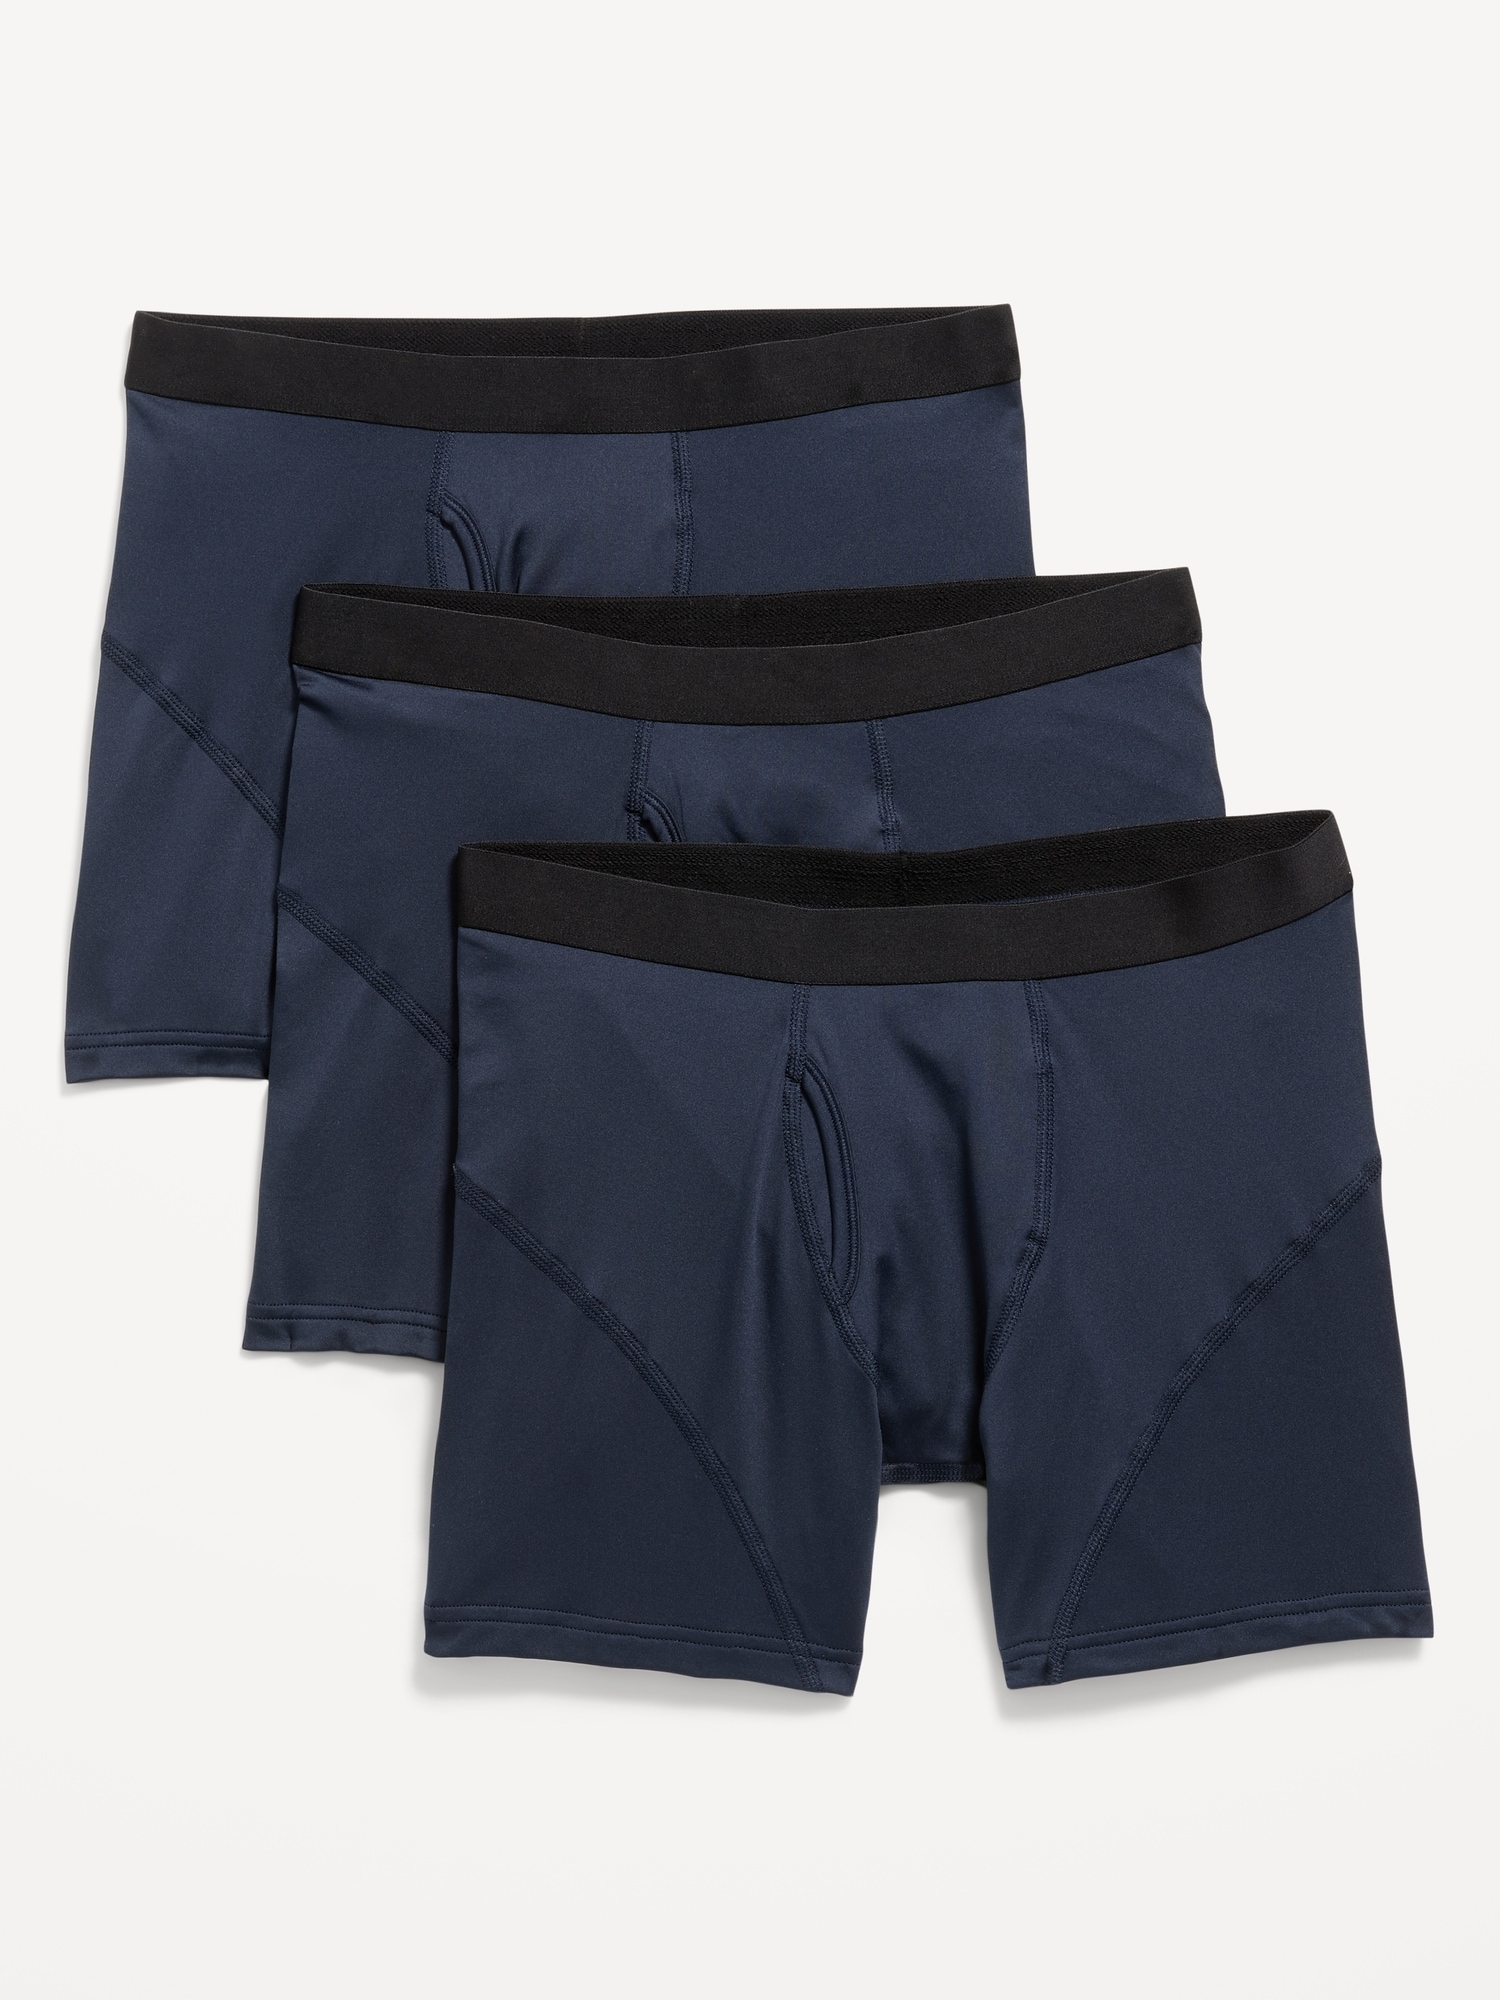 Go-Dry Cool Performance Boxer-Briefs Underwear 3-Pack -- 5-inch